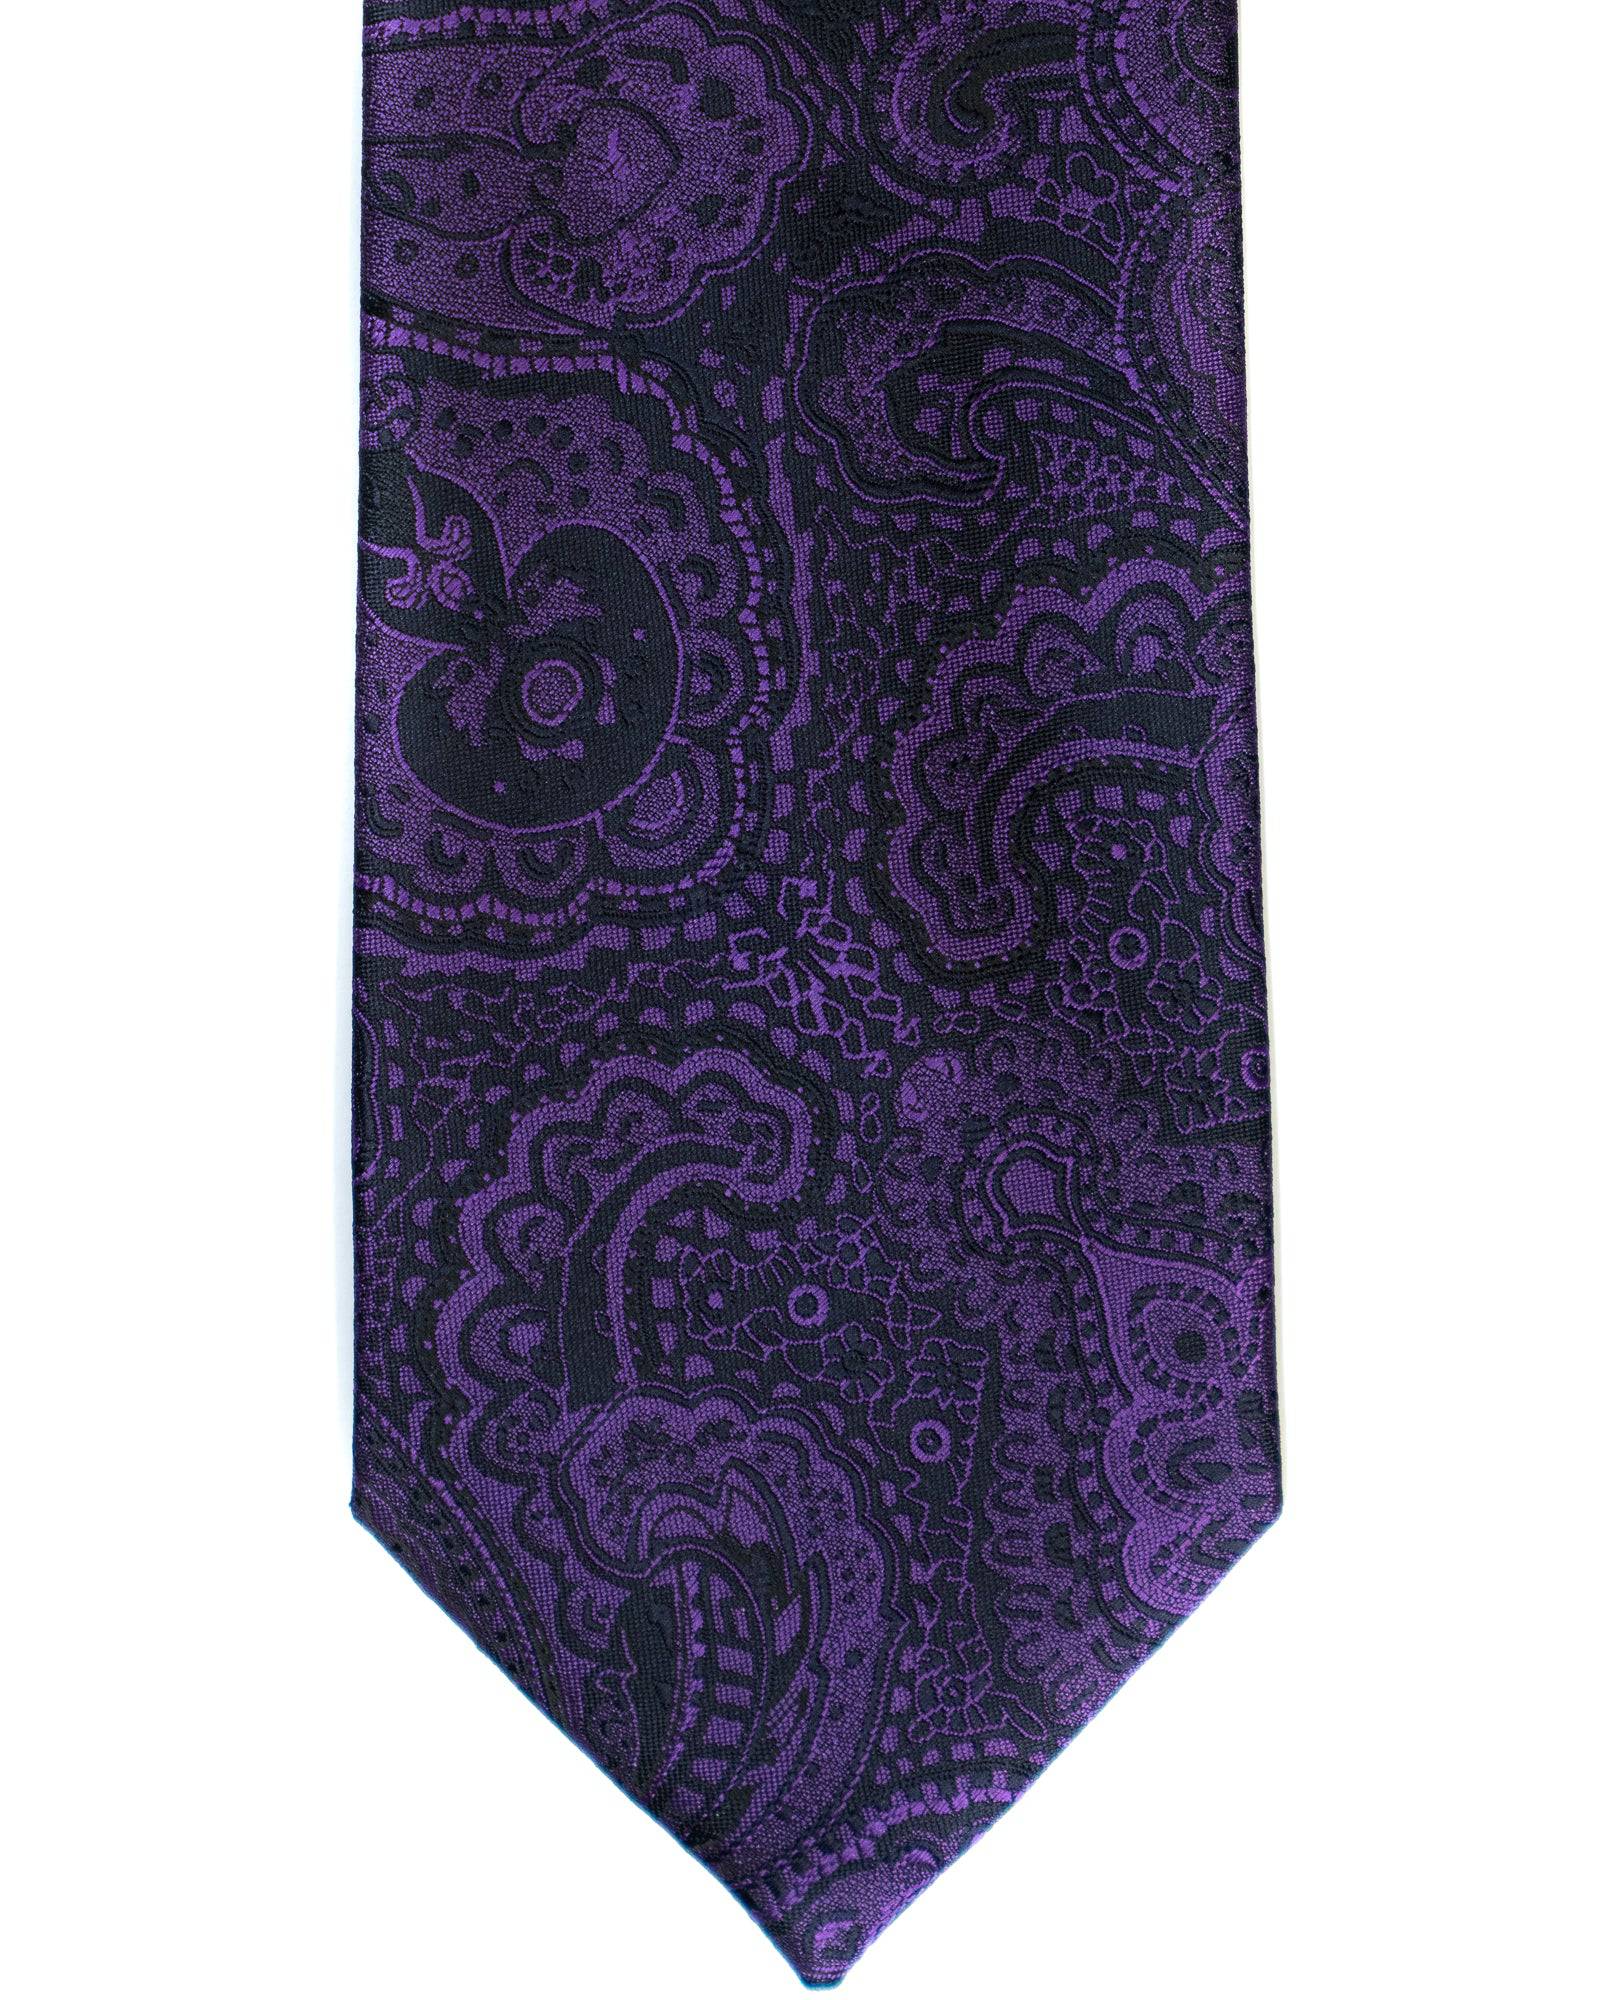 Gianfranco Paisley Tie in Purple with Black - Rainwater's Men's Clothing and Tuxedo Rental